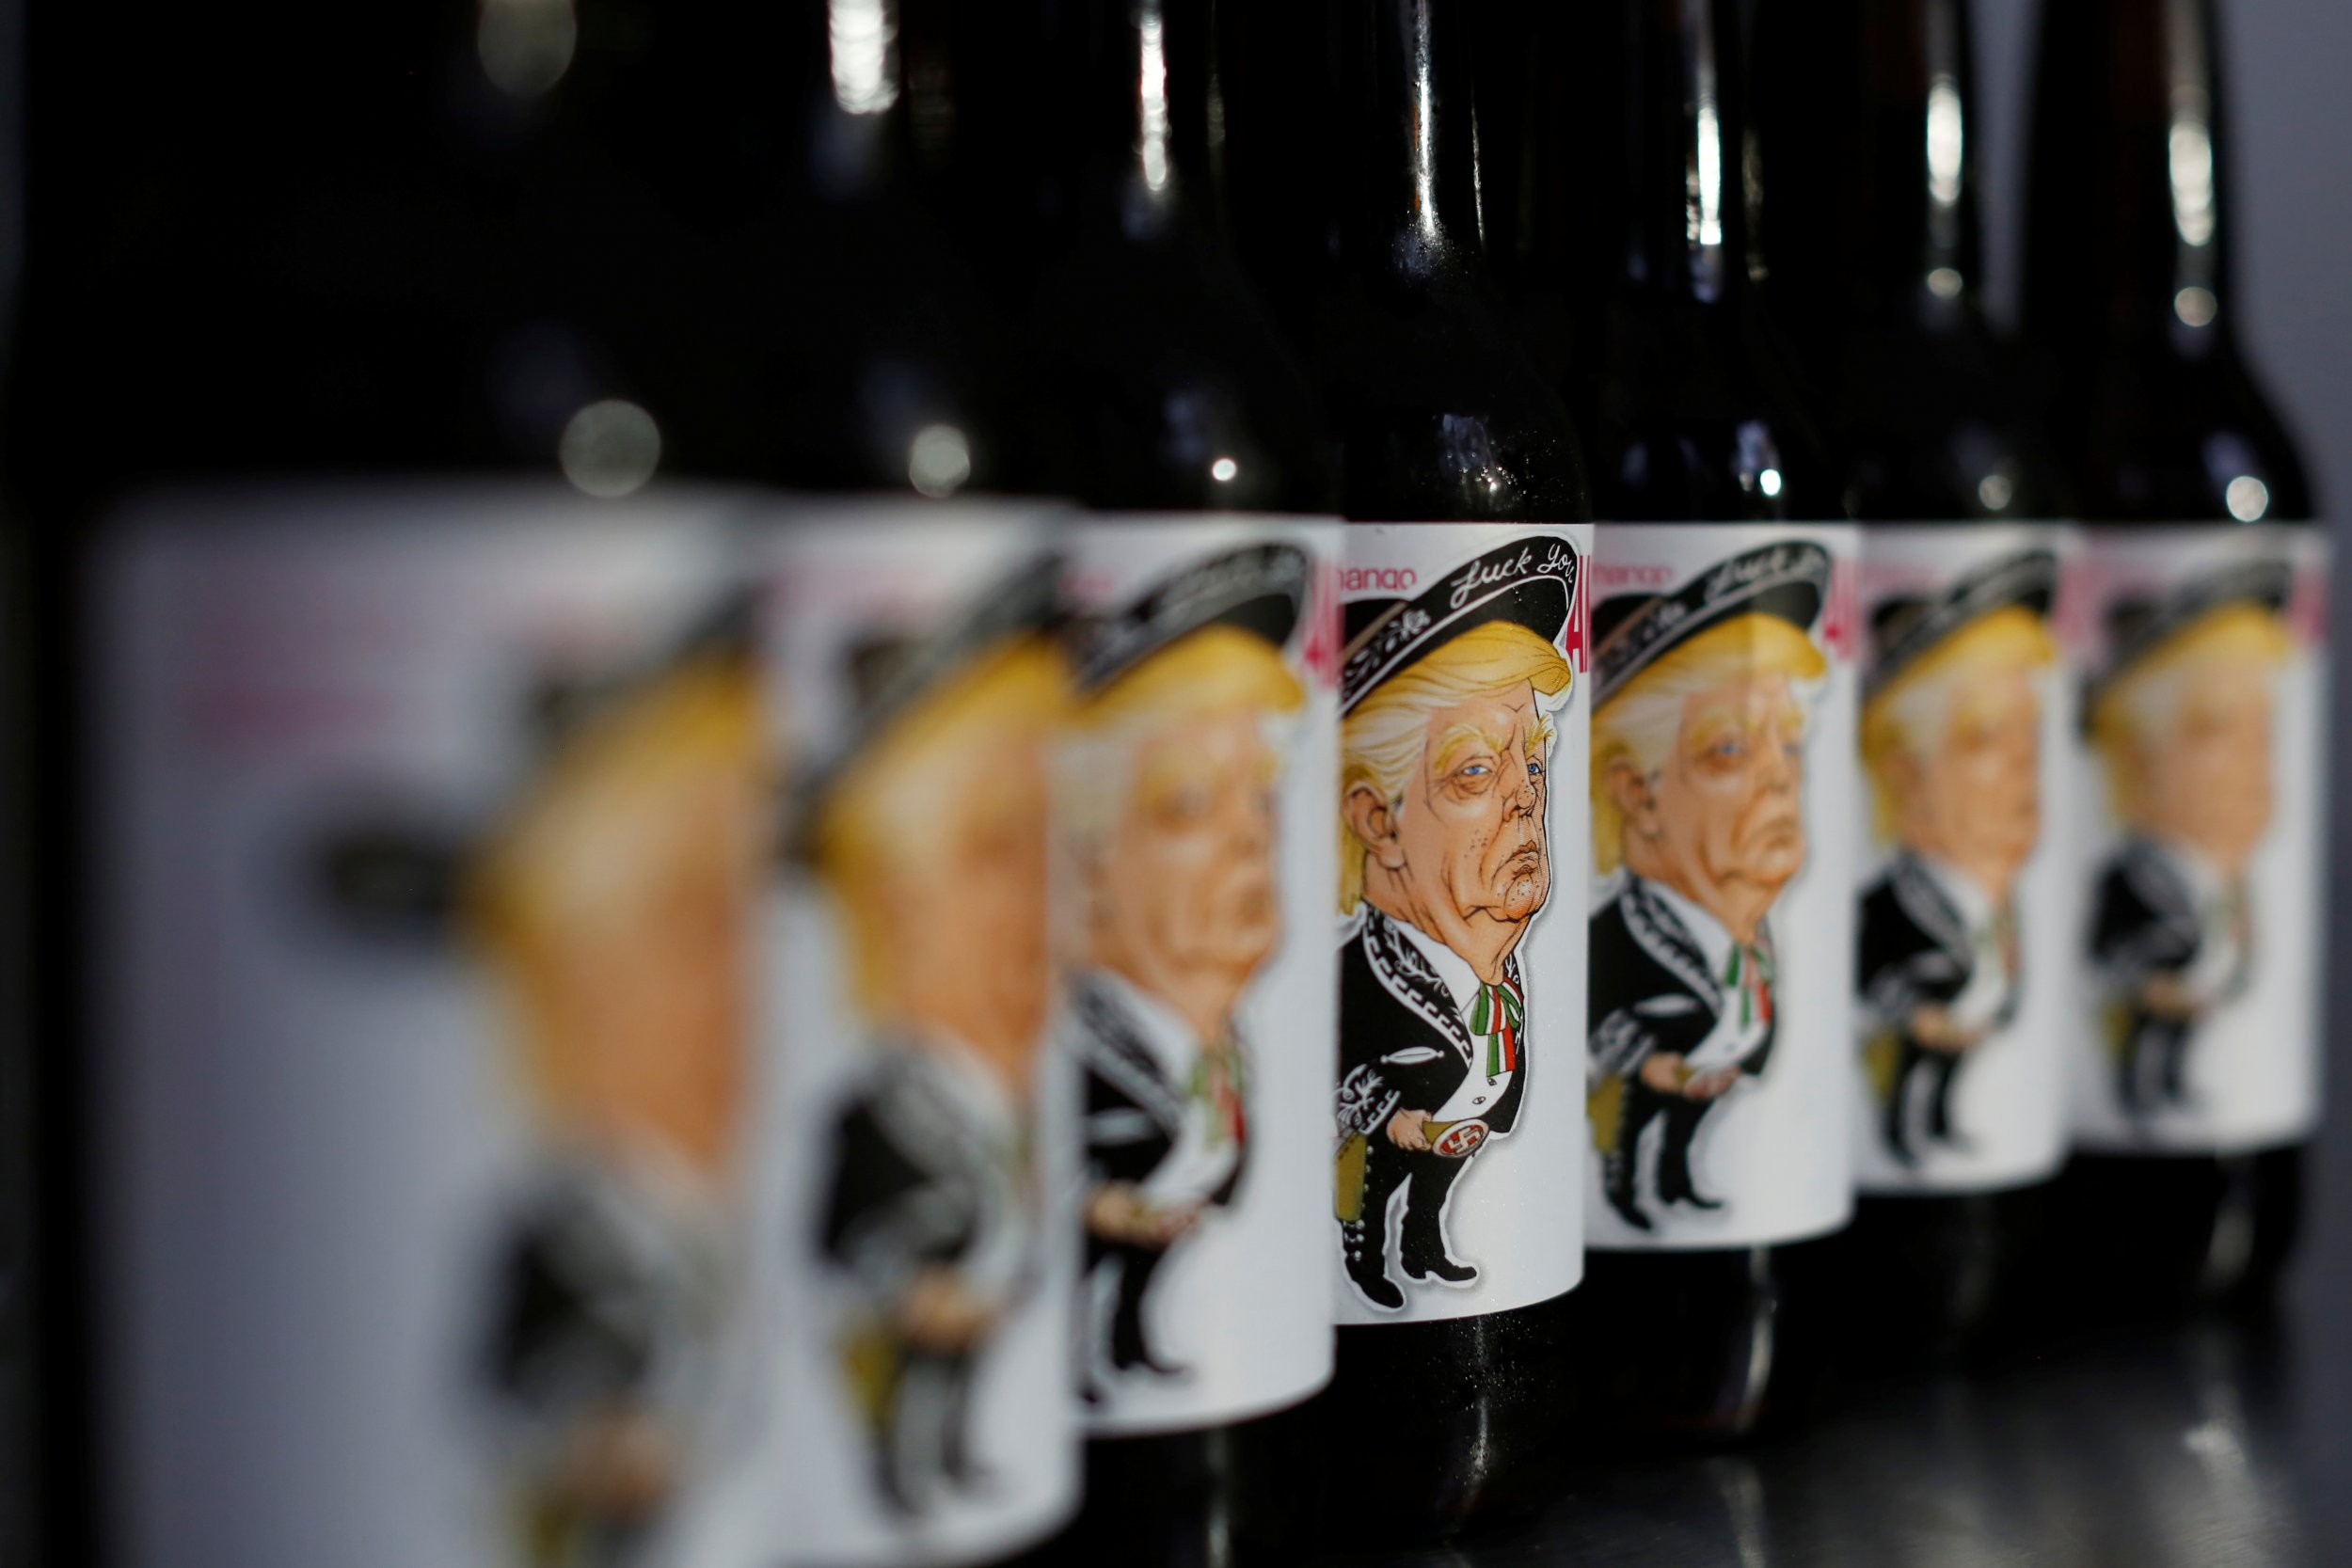 Trump beer